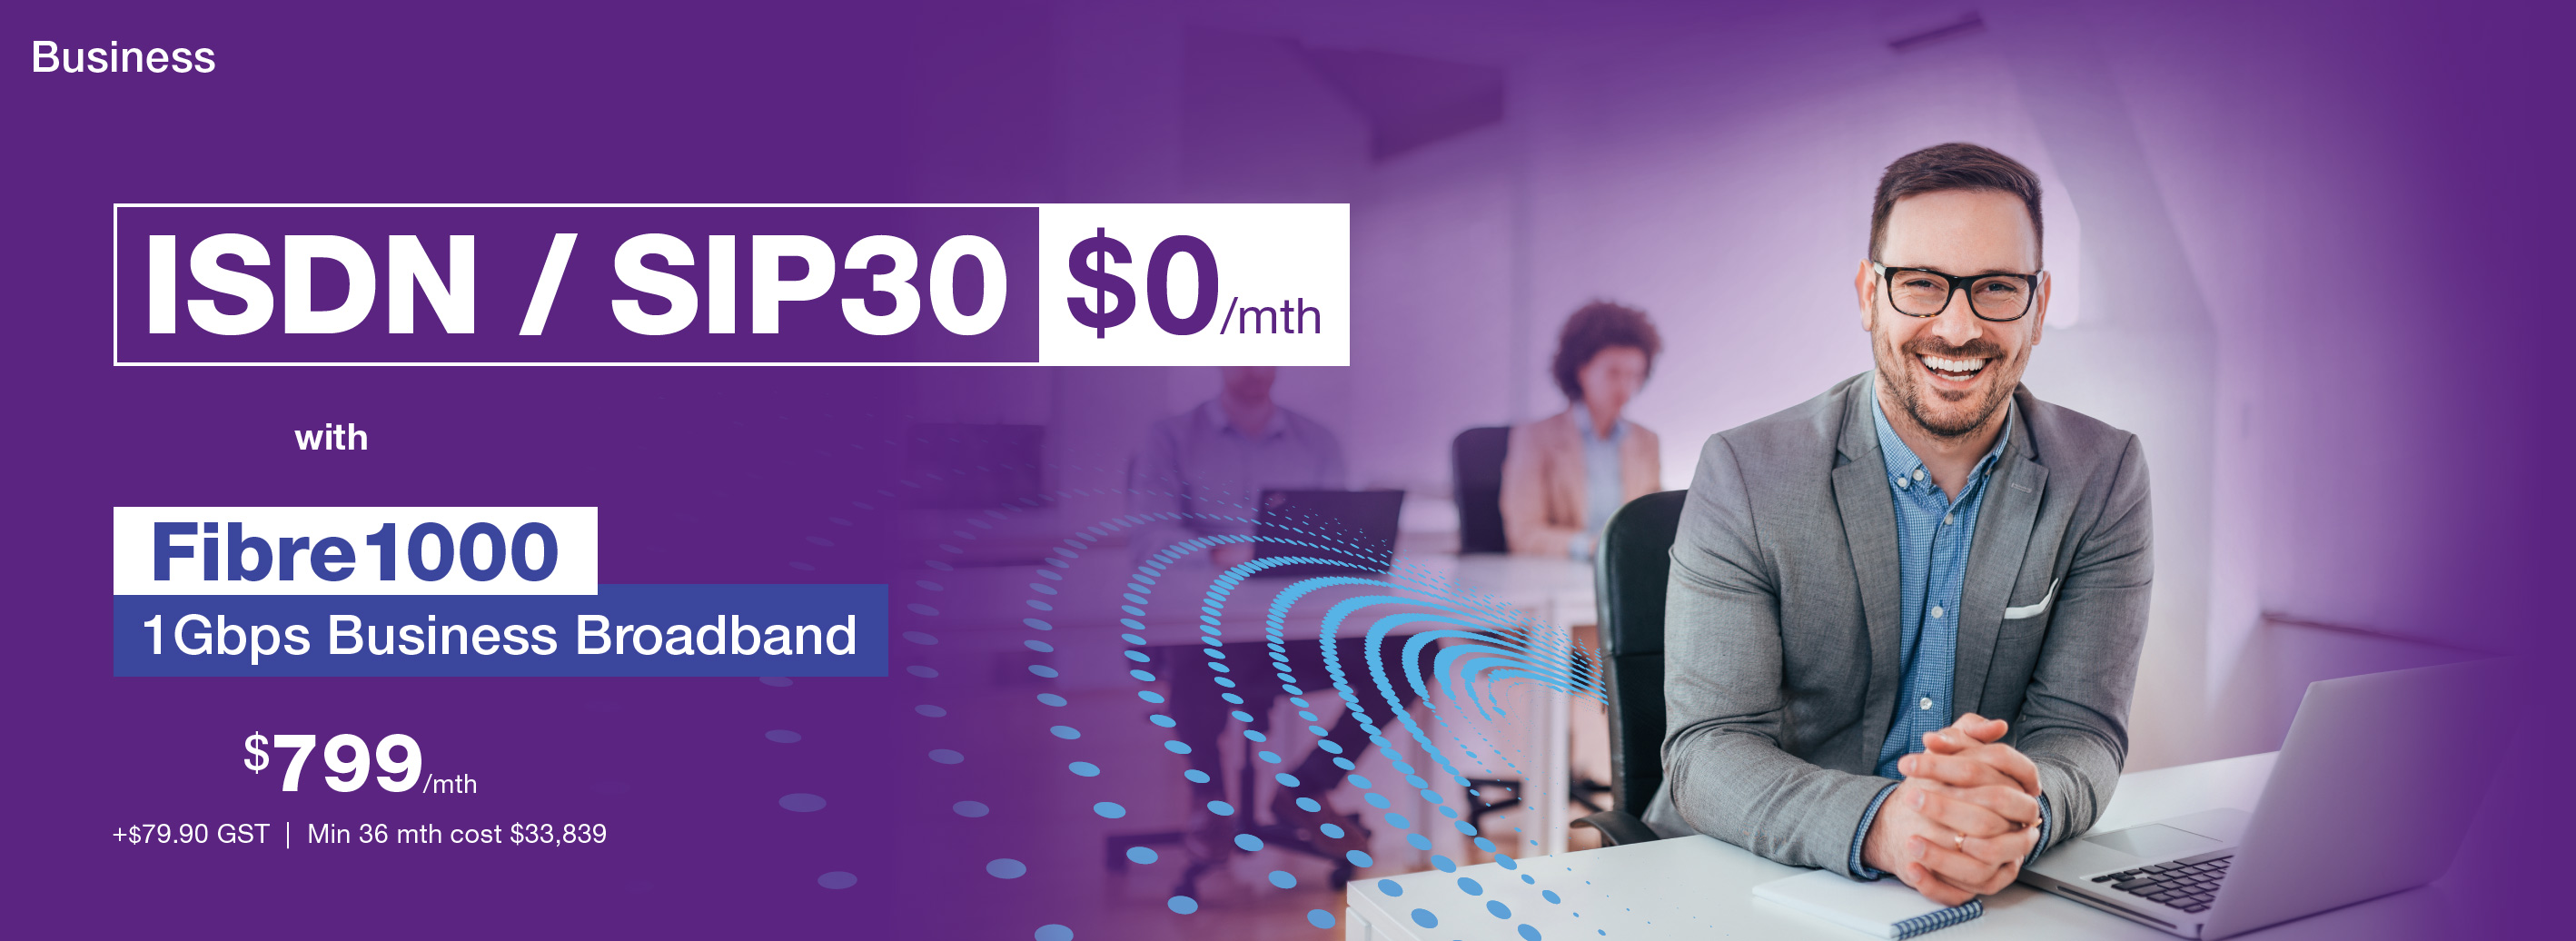 ISDN30/SIP30 with Fibre1000 - Business grade Bundle combining Fibre Optic Broadband and Voice Access